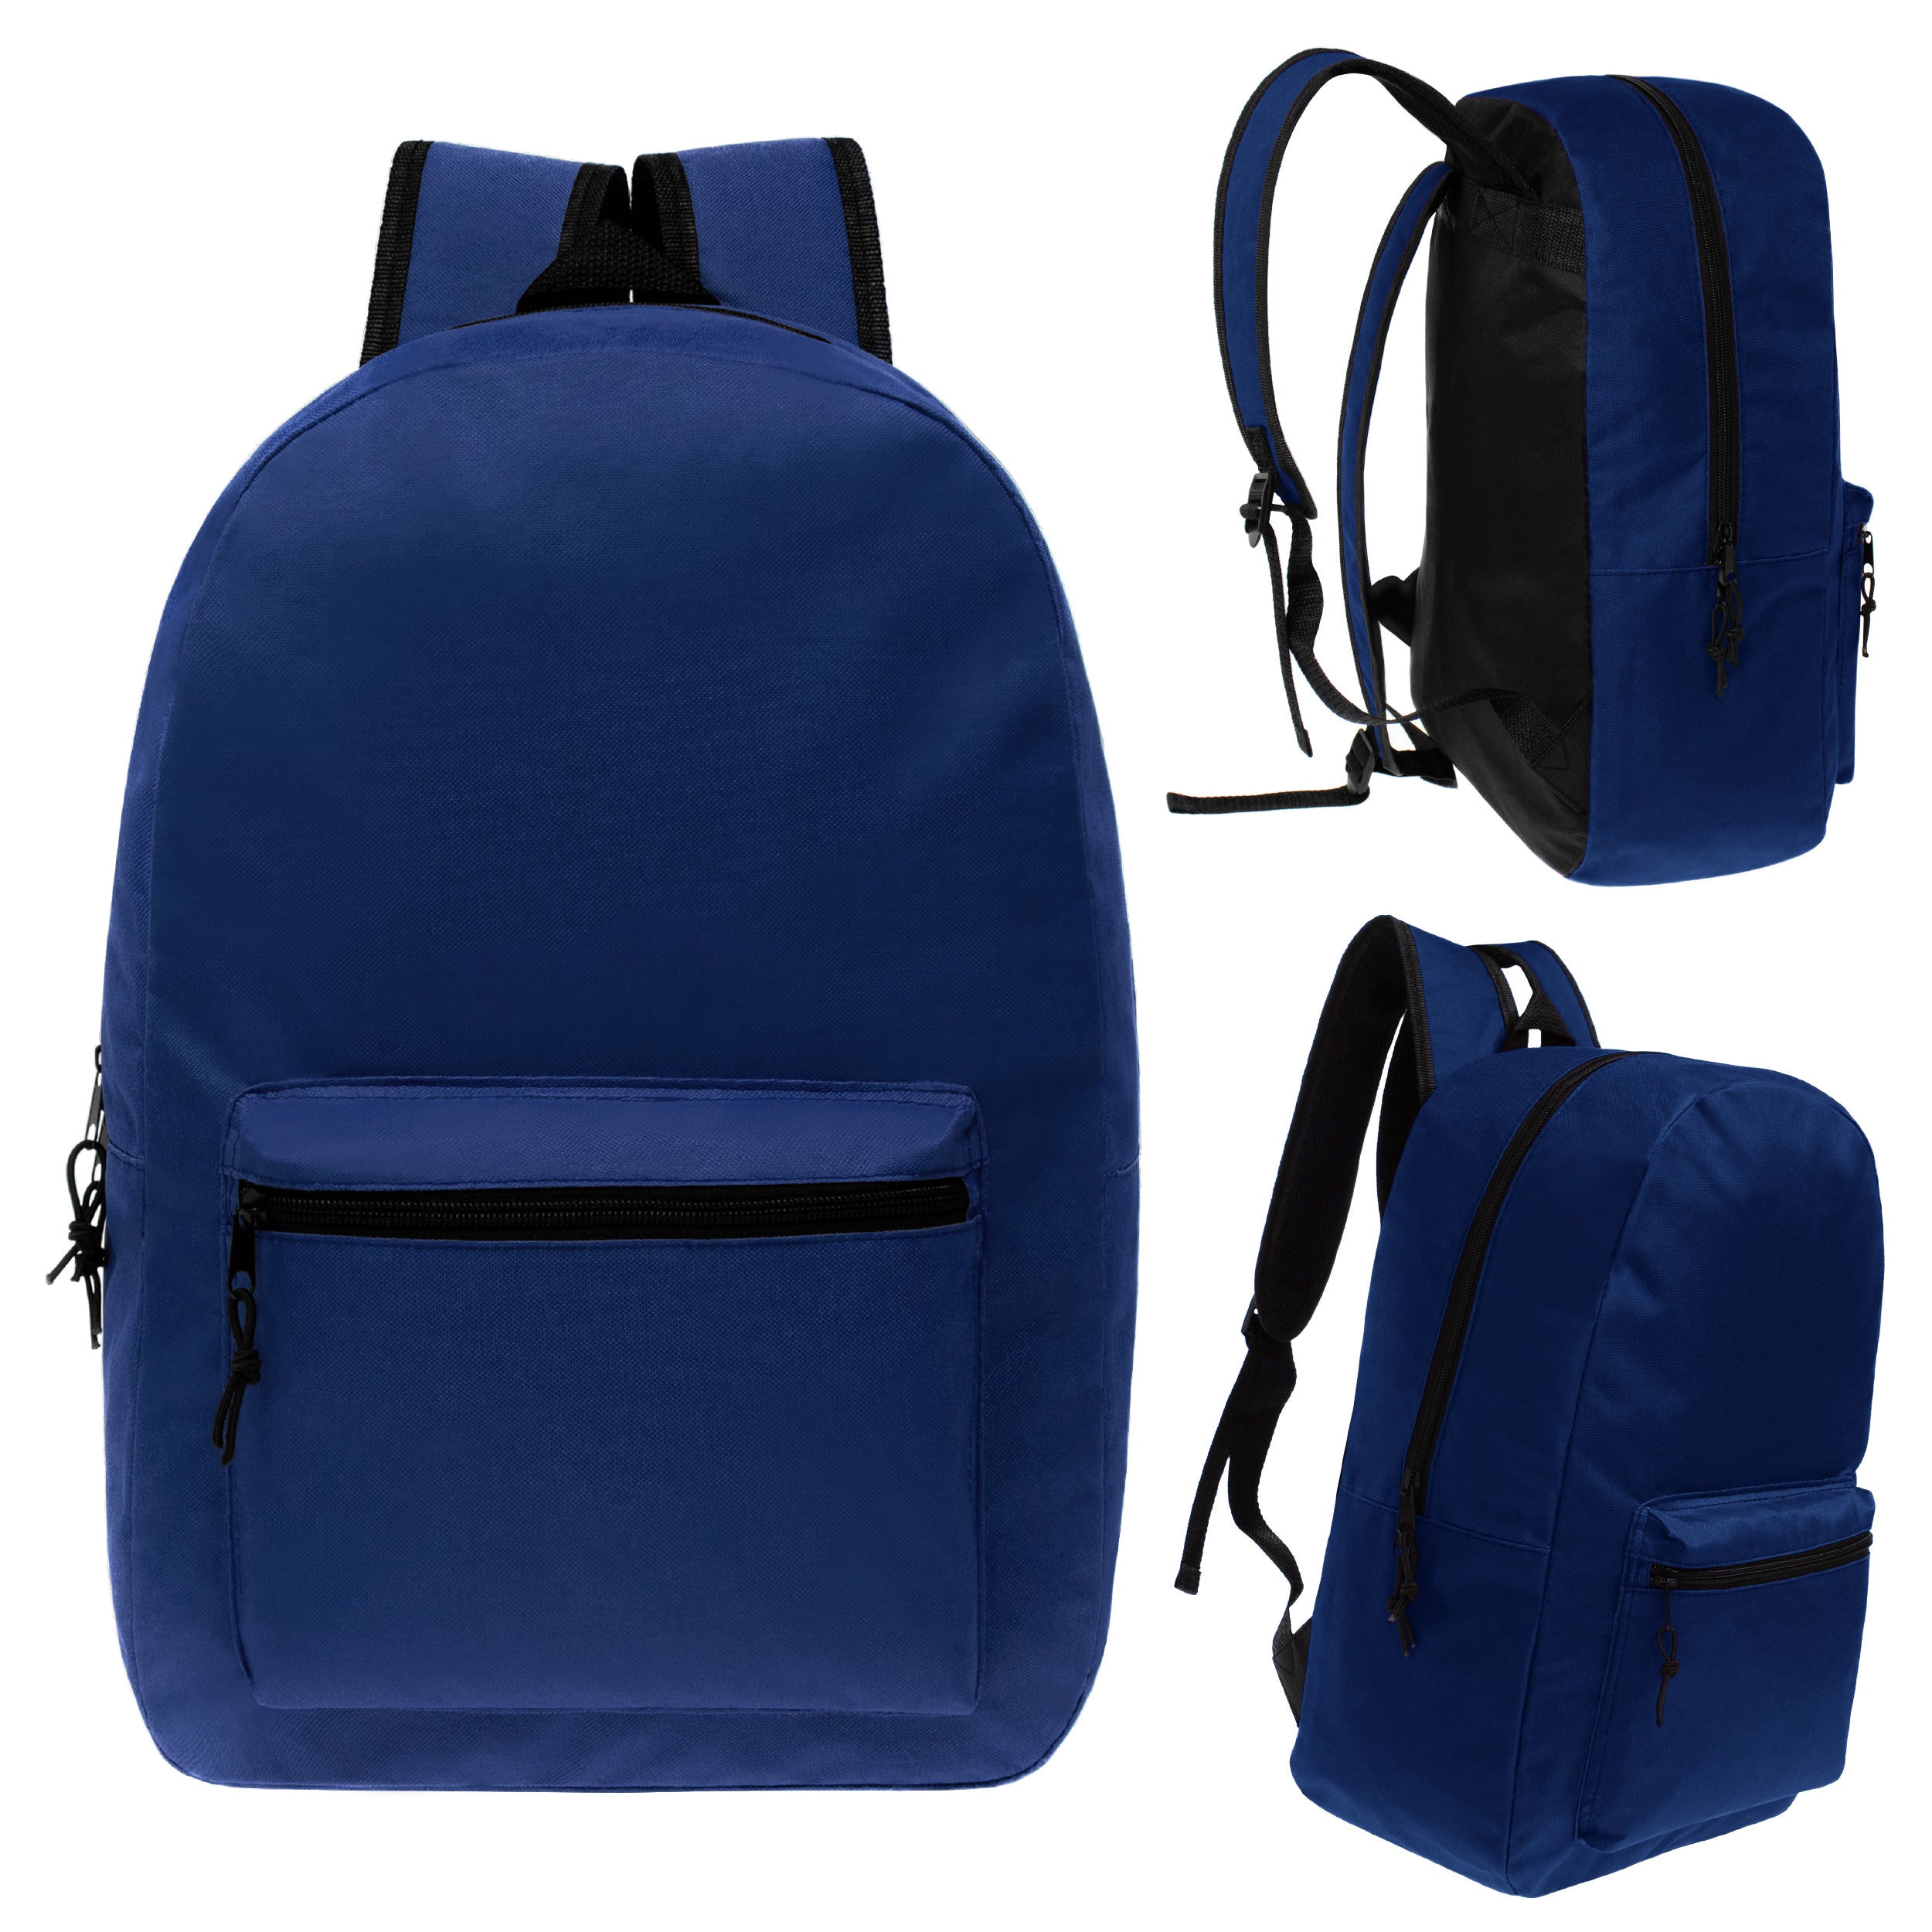 School Supplies Backpacks Wholesale and | Backpacks USA